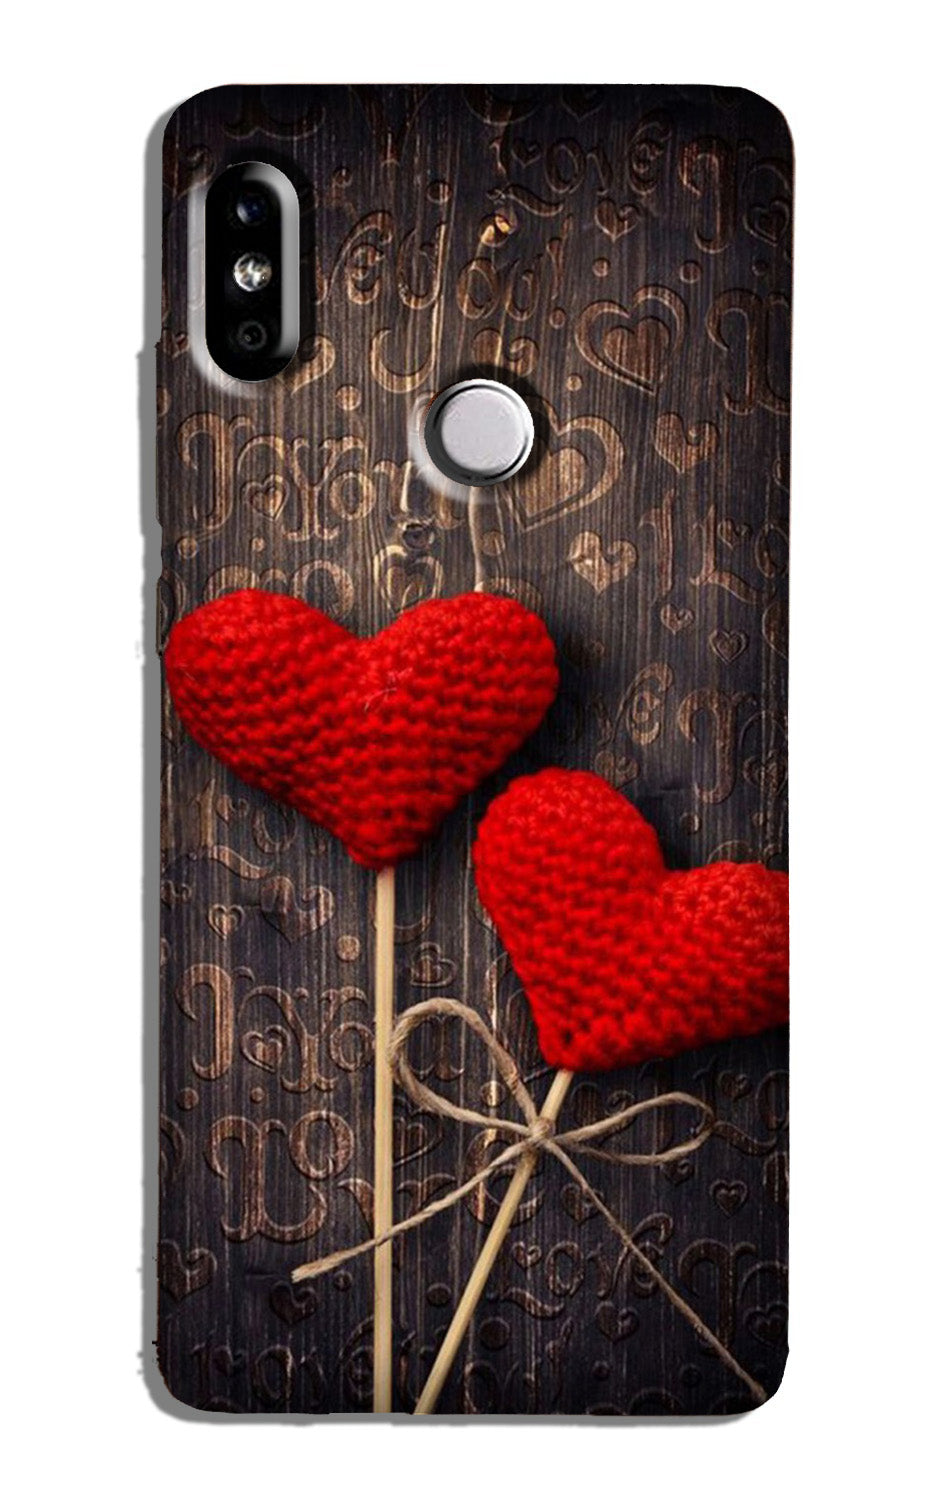 Red Hearts Case for Redmi 6 Pro